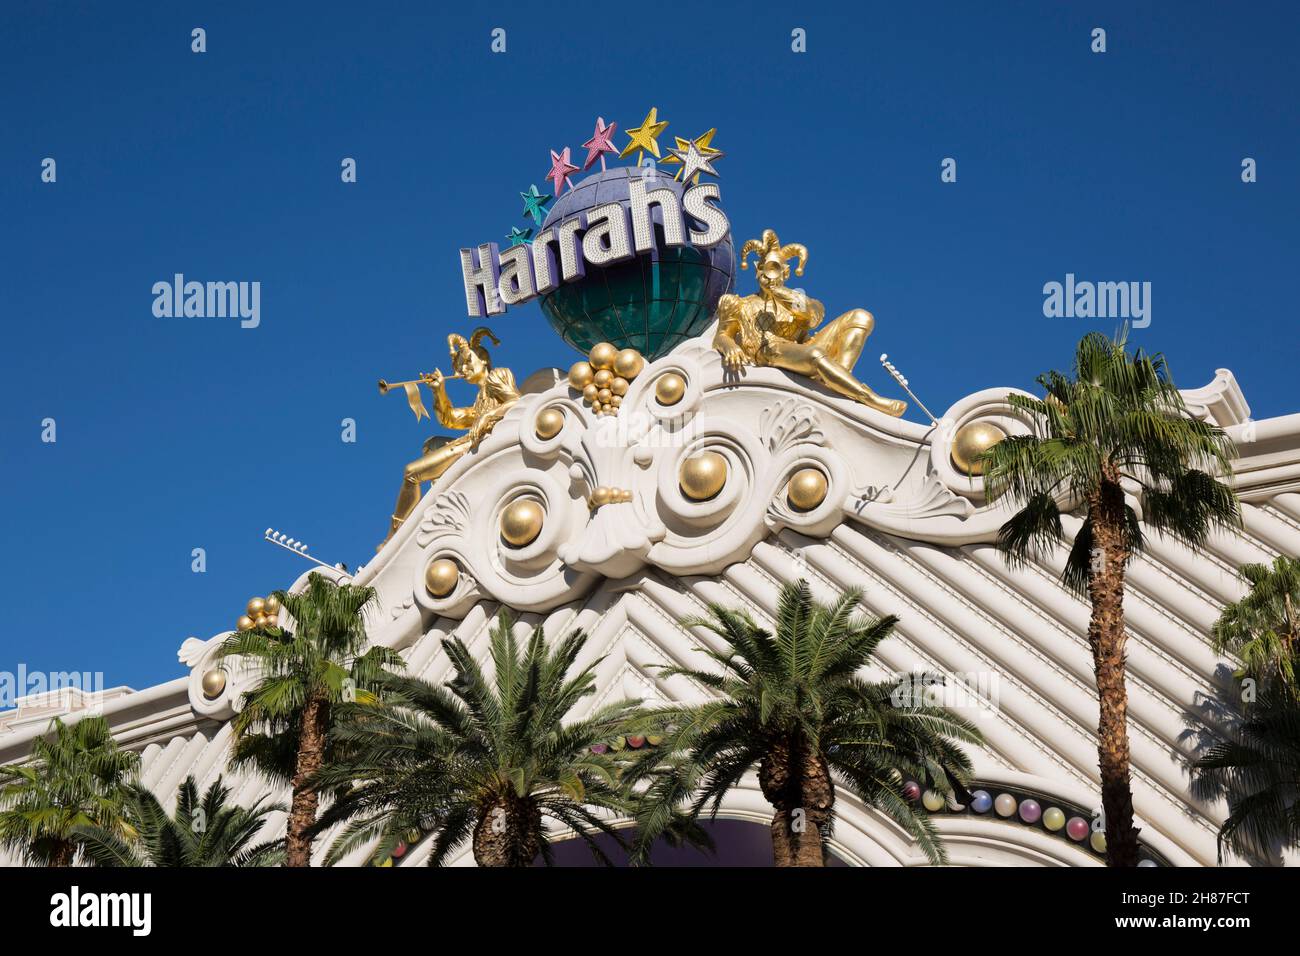 Las Vegas, Nevada, USA. Golden carnival ornamentation adorning the upper façade of Harrah's Las Vegas Hotel and Casino, palm trees in foreground. Stock Photo